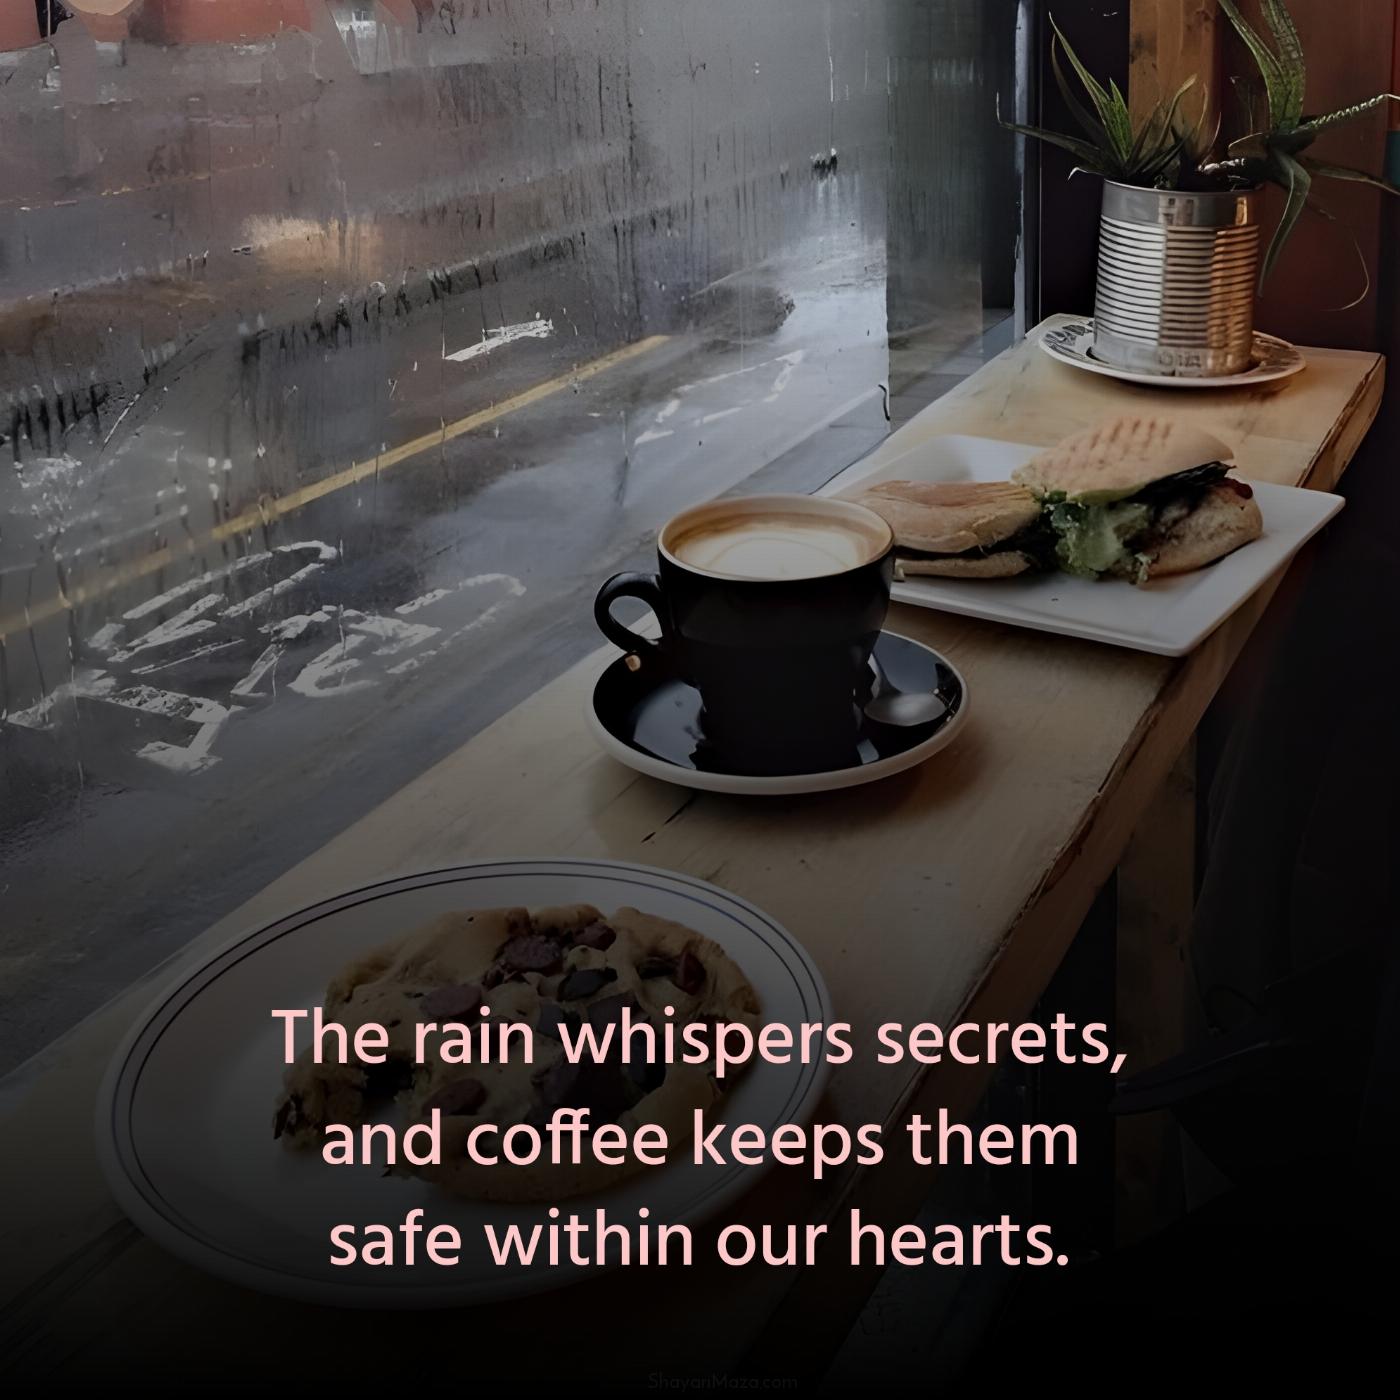 The rain whispers secrets and coffee keeps them safe